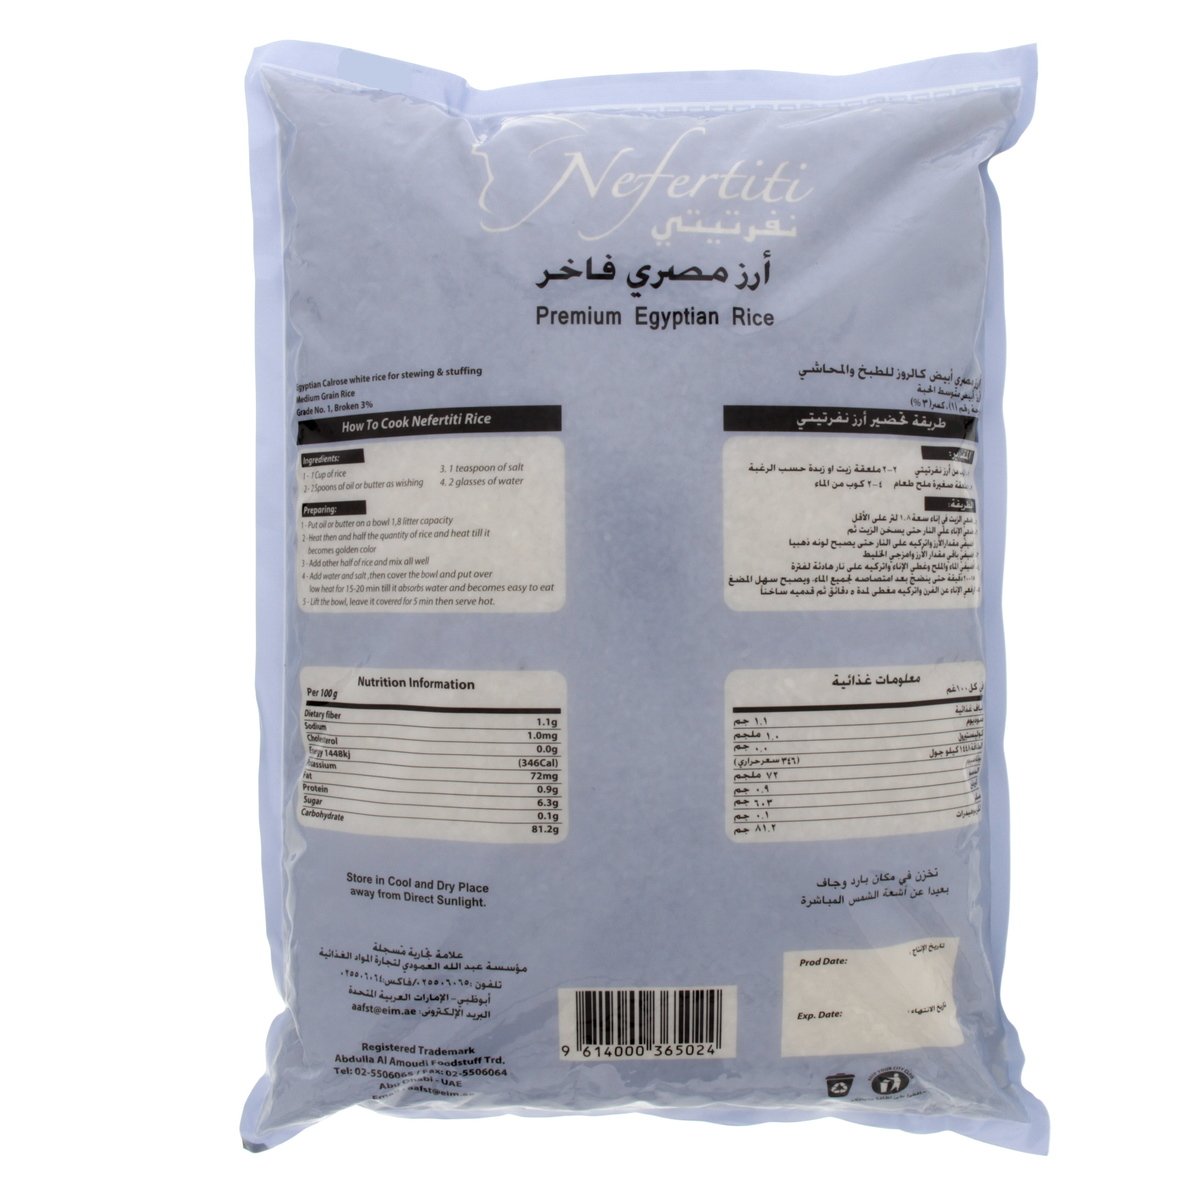 Nefertiti Premium Egyptian Rice 5 kg